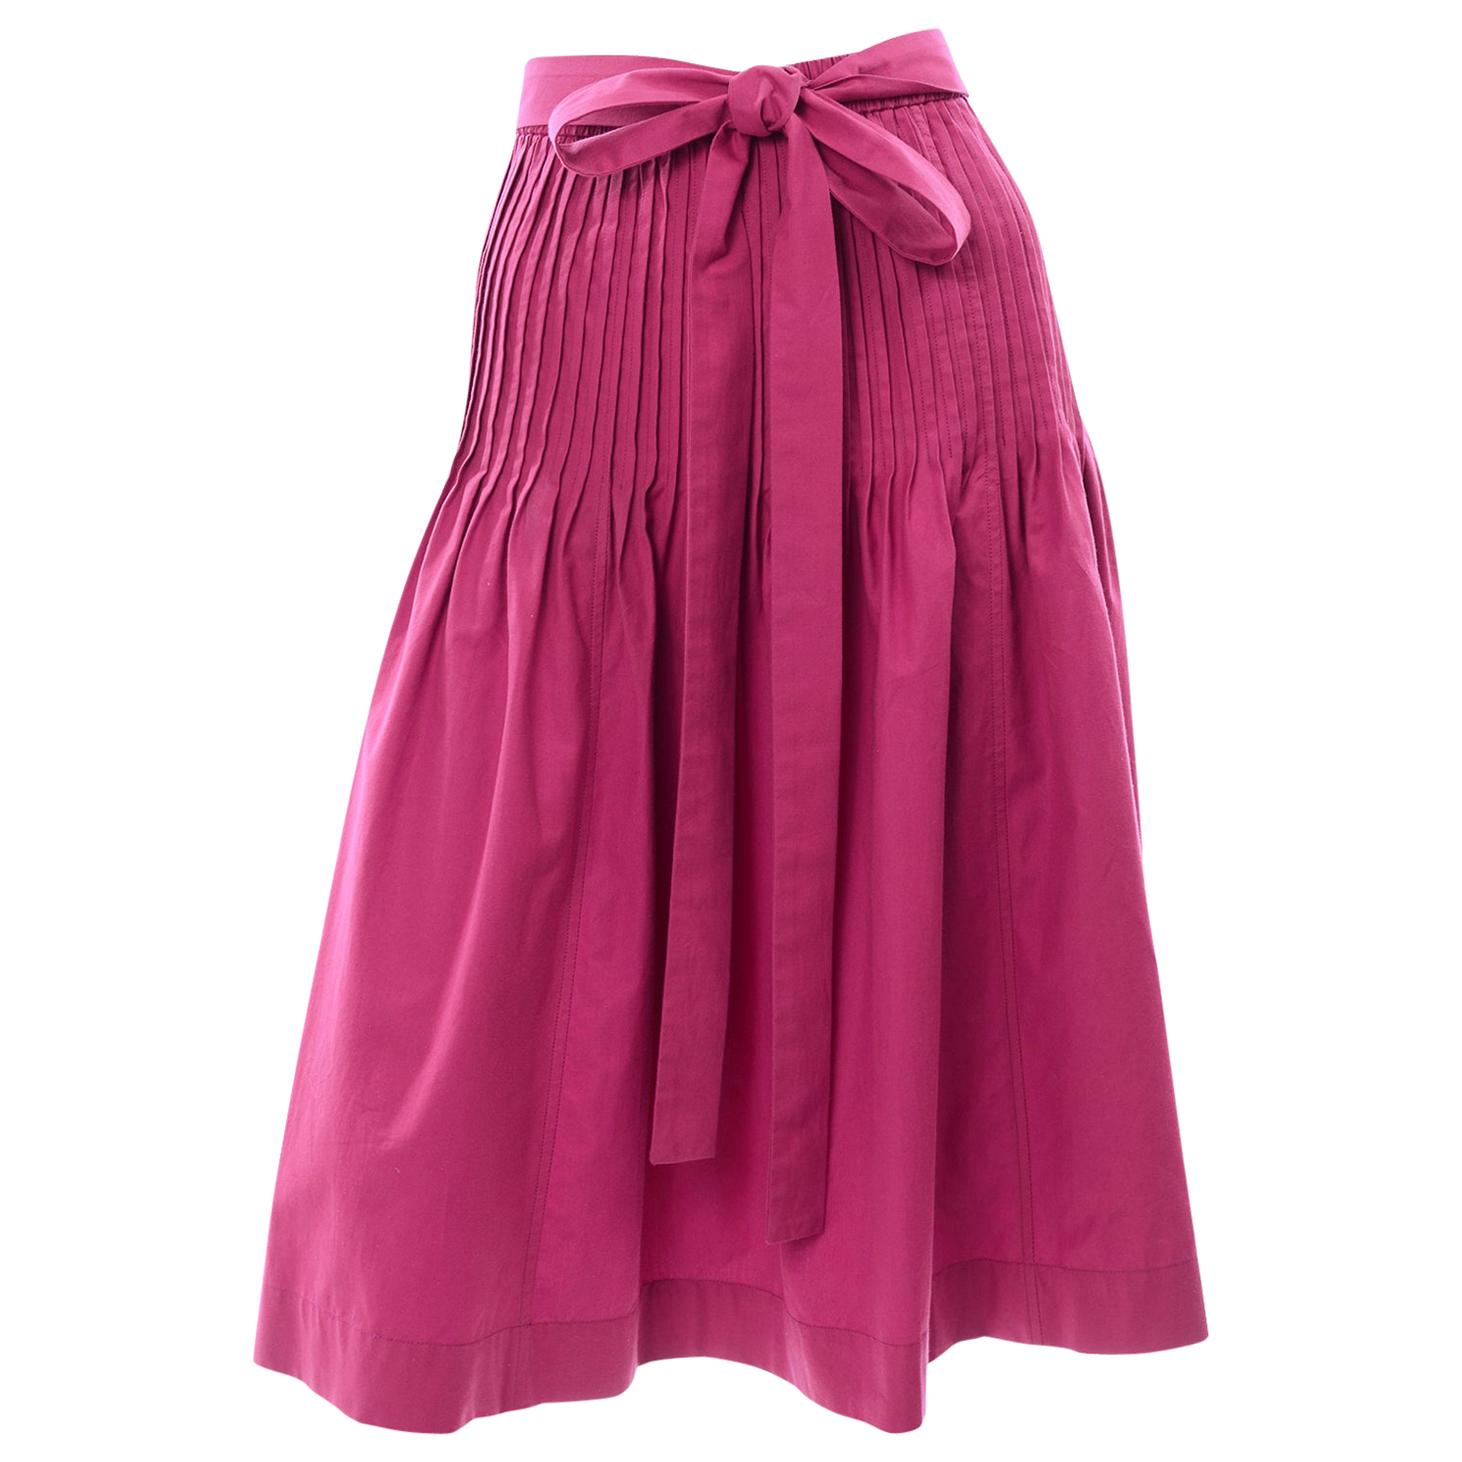 1970s Yves Saint Laurent Vintage Fuschia Pink Cotton Skirt With Sash Belt